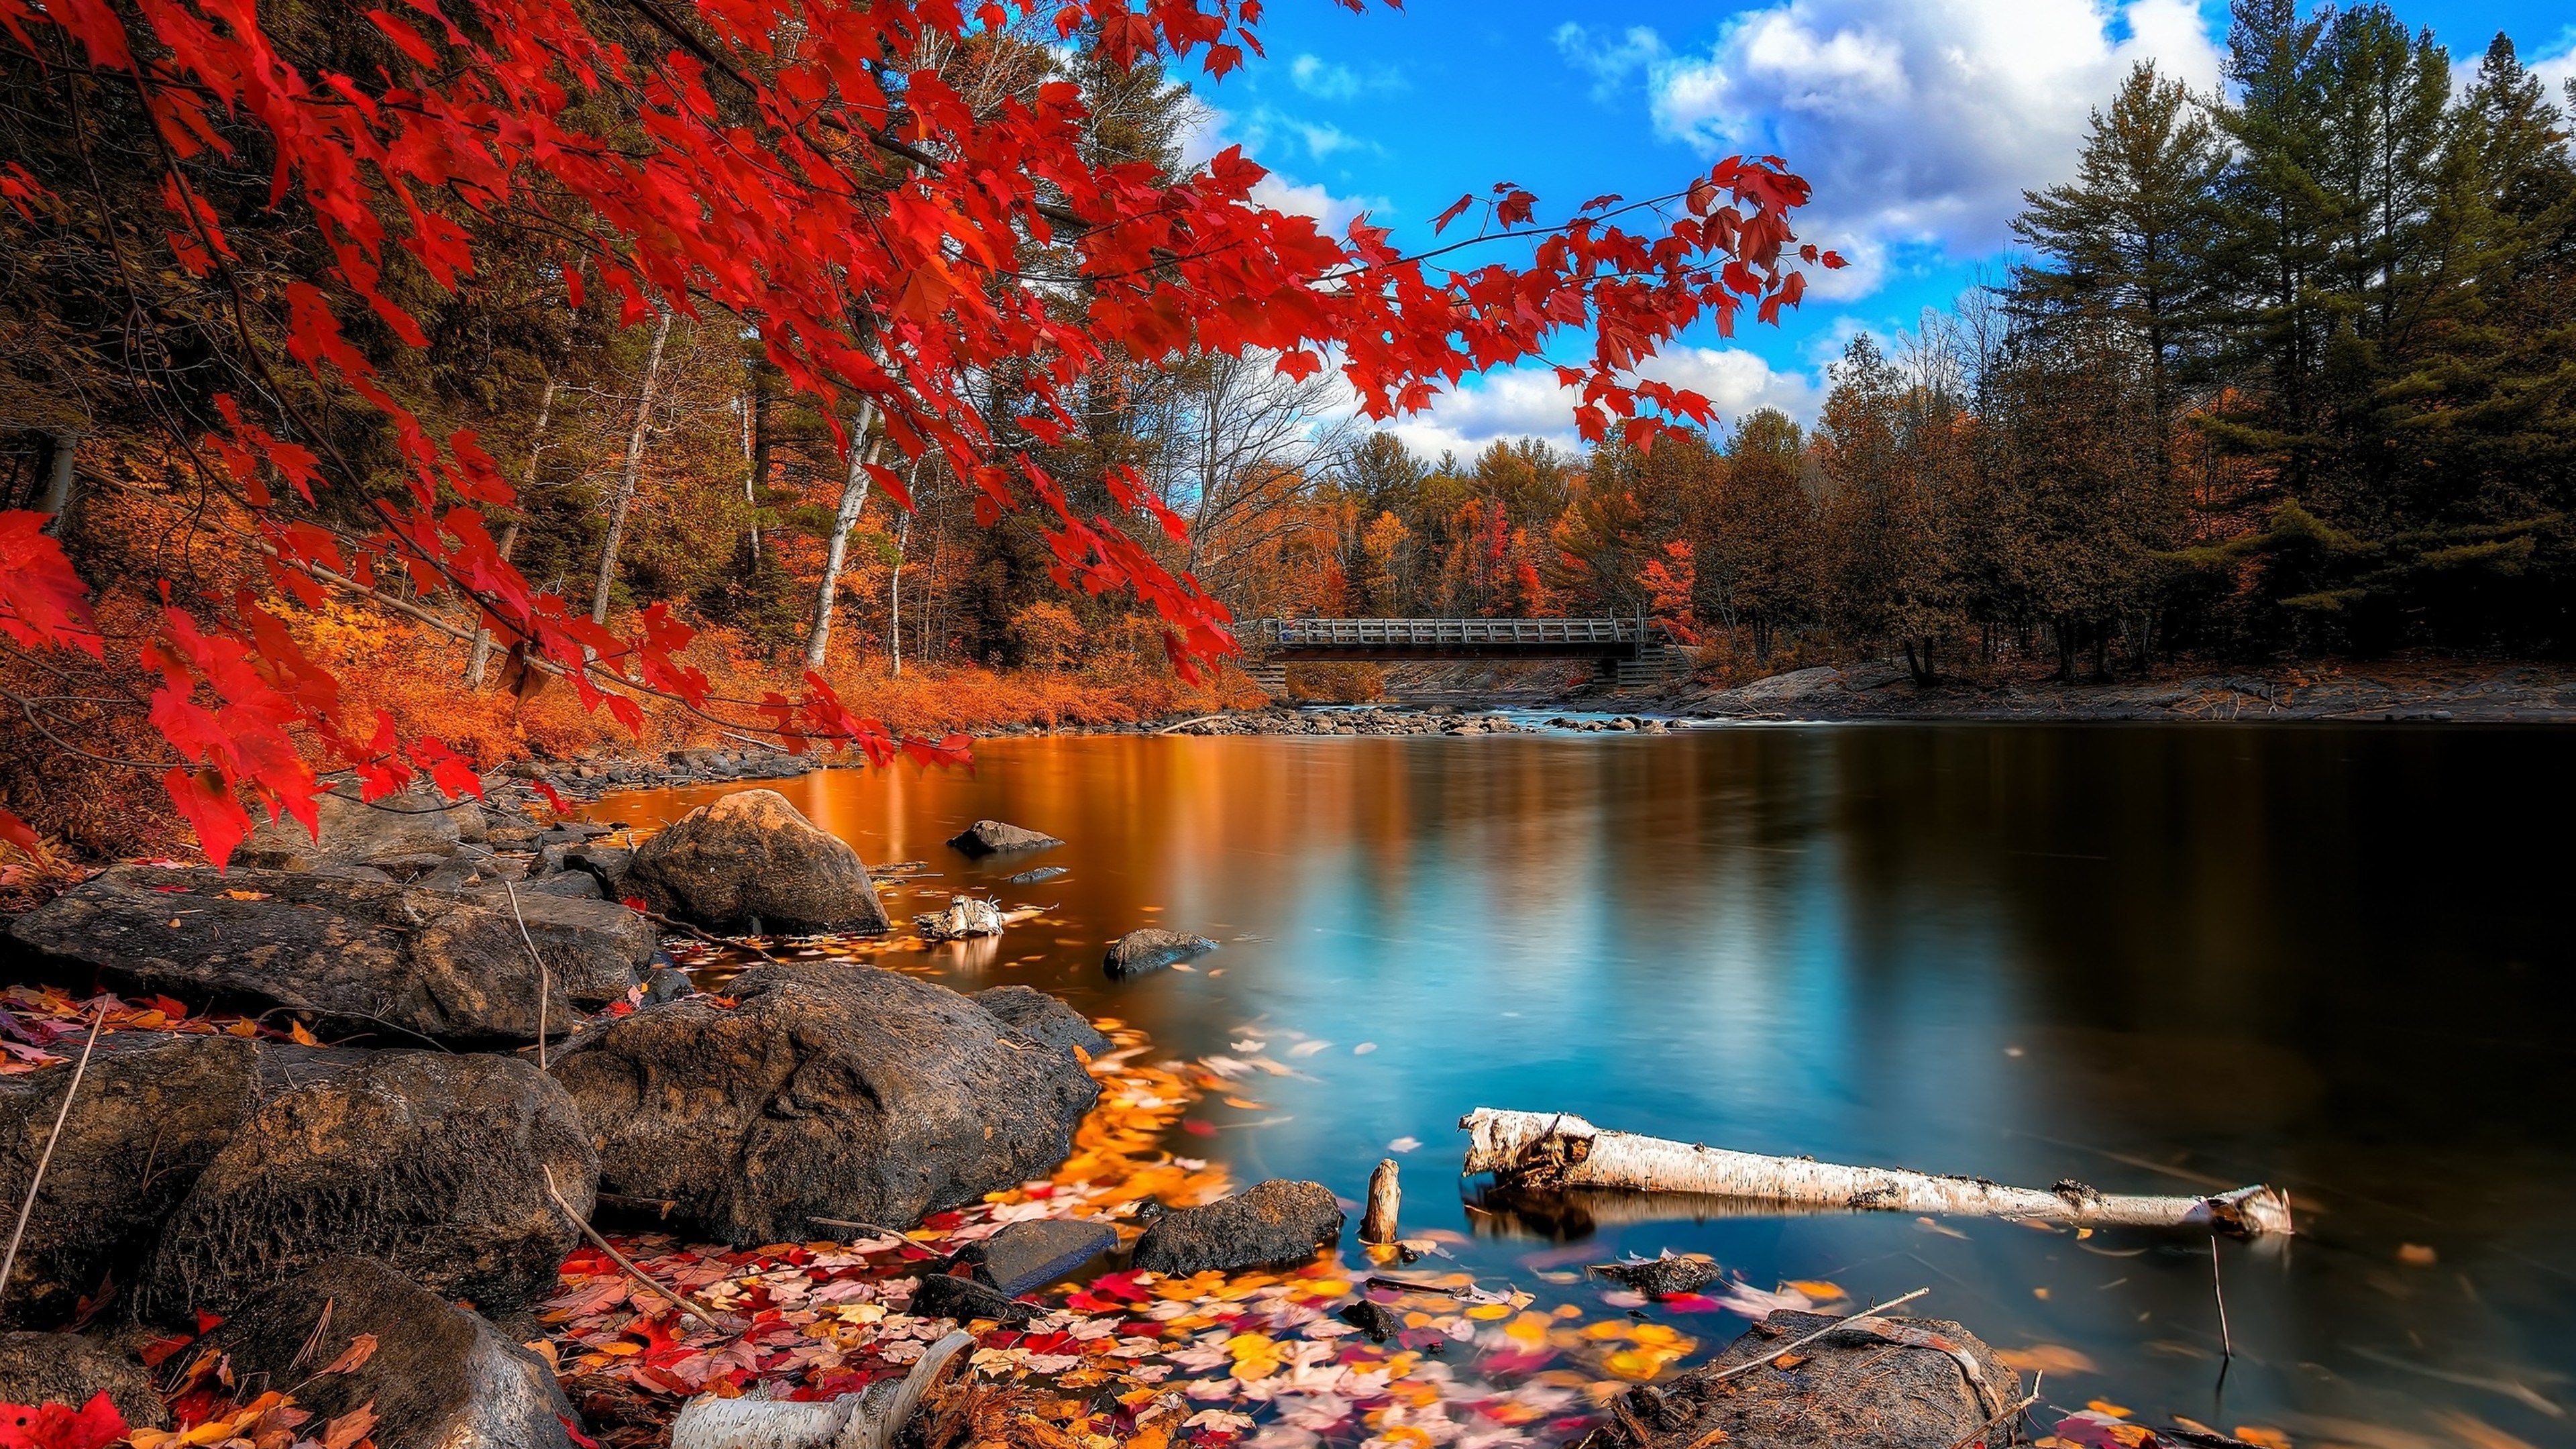 nature 4k desktop wallpaper cool. Autumn scenery, Nature desktop, Beautiful nature